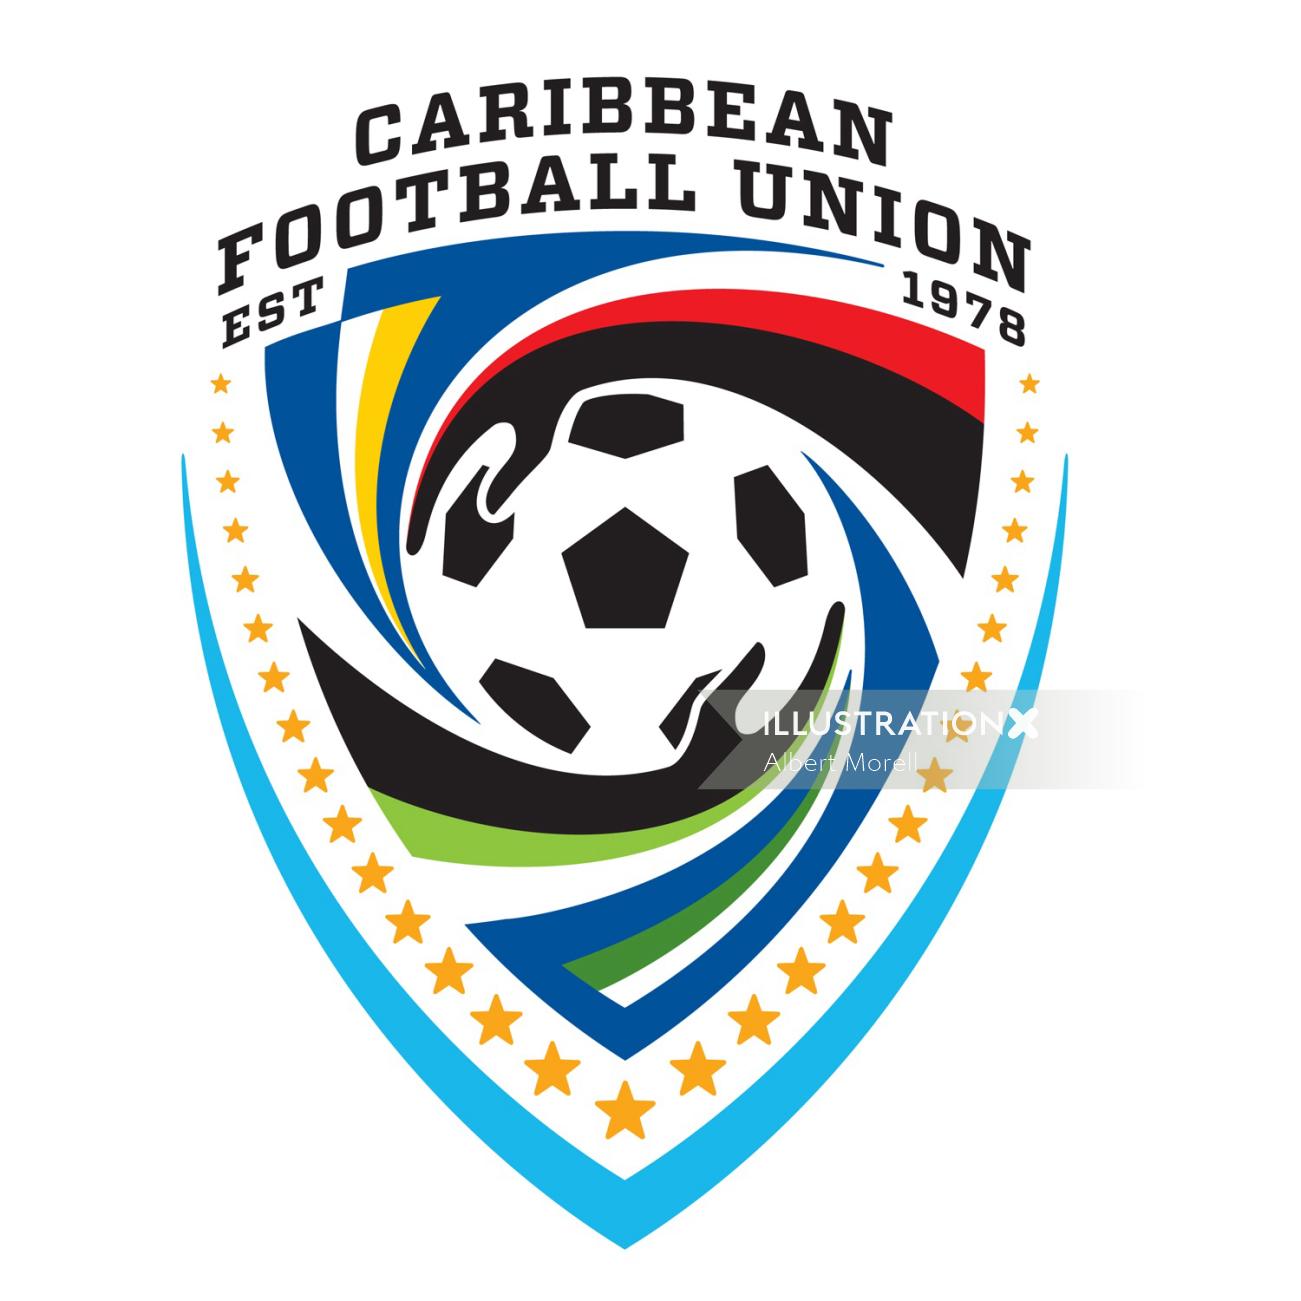 Association de football des Caraïbes